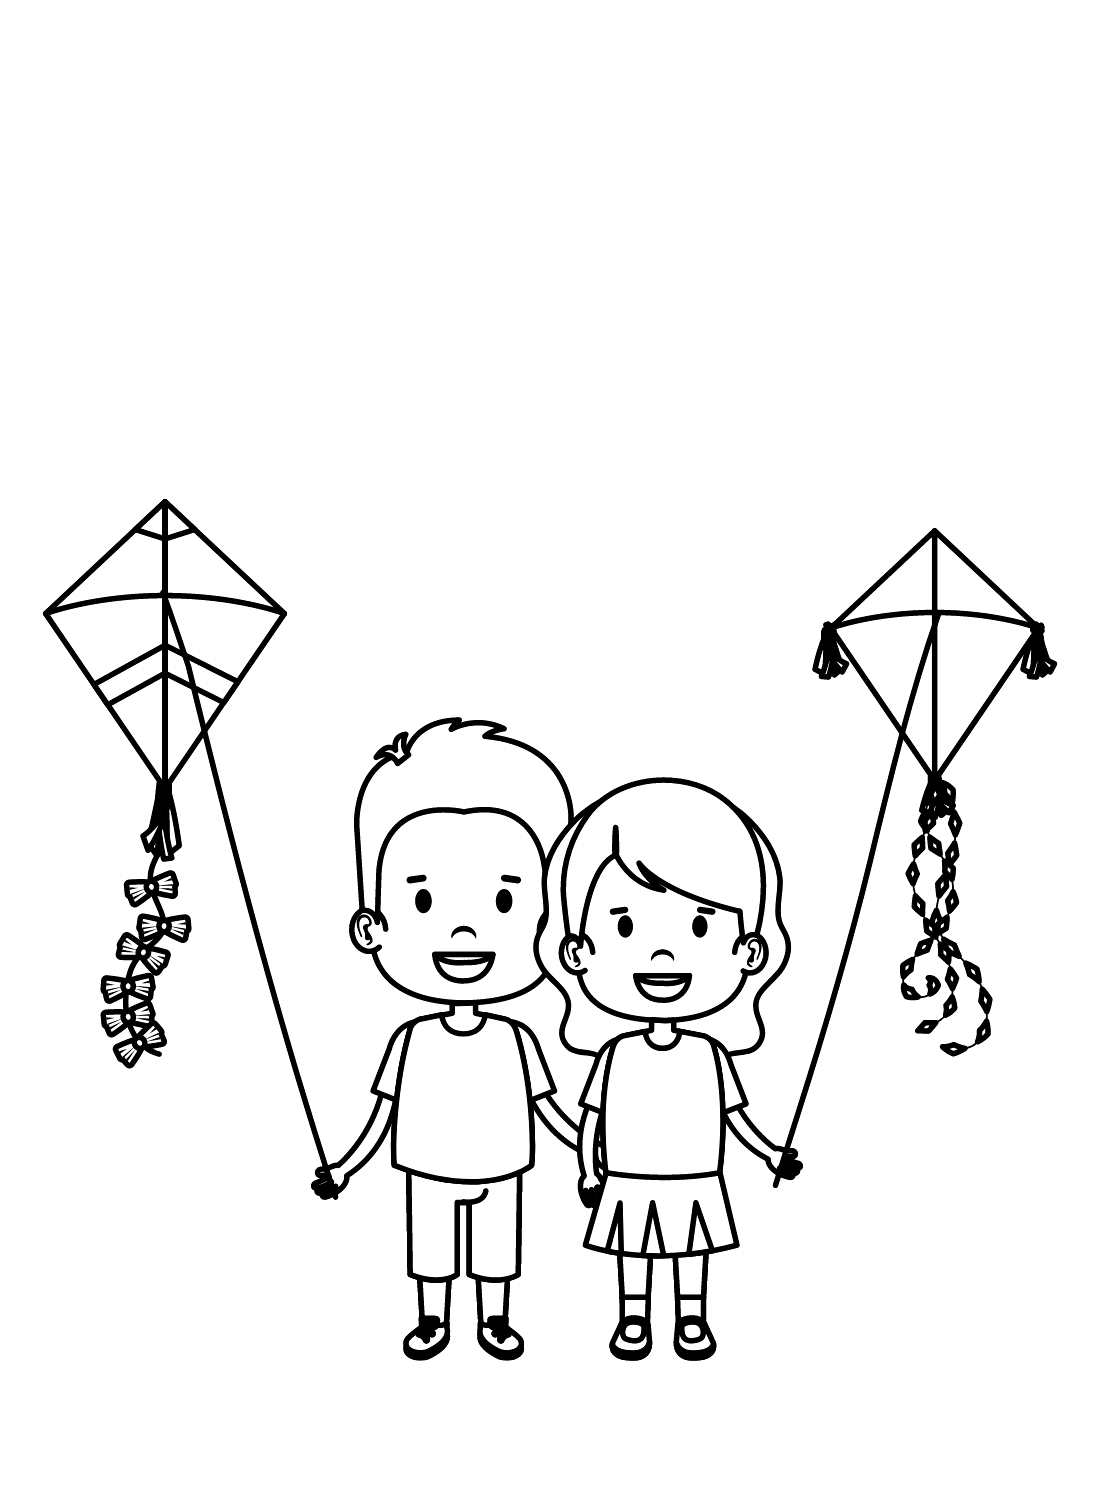 Boy and Girl Flying Kite